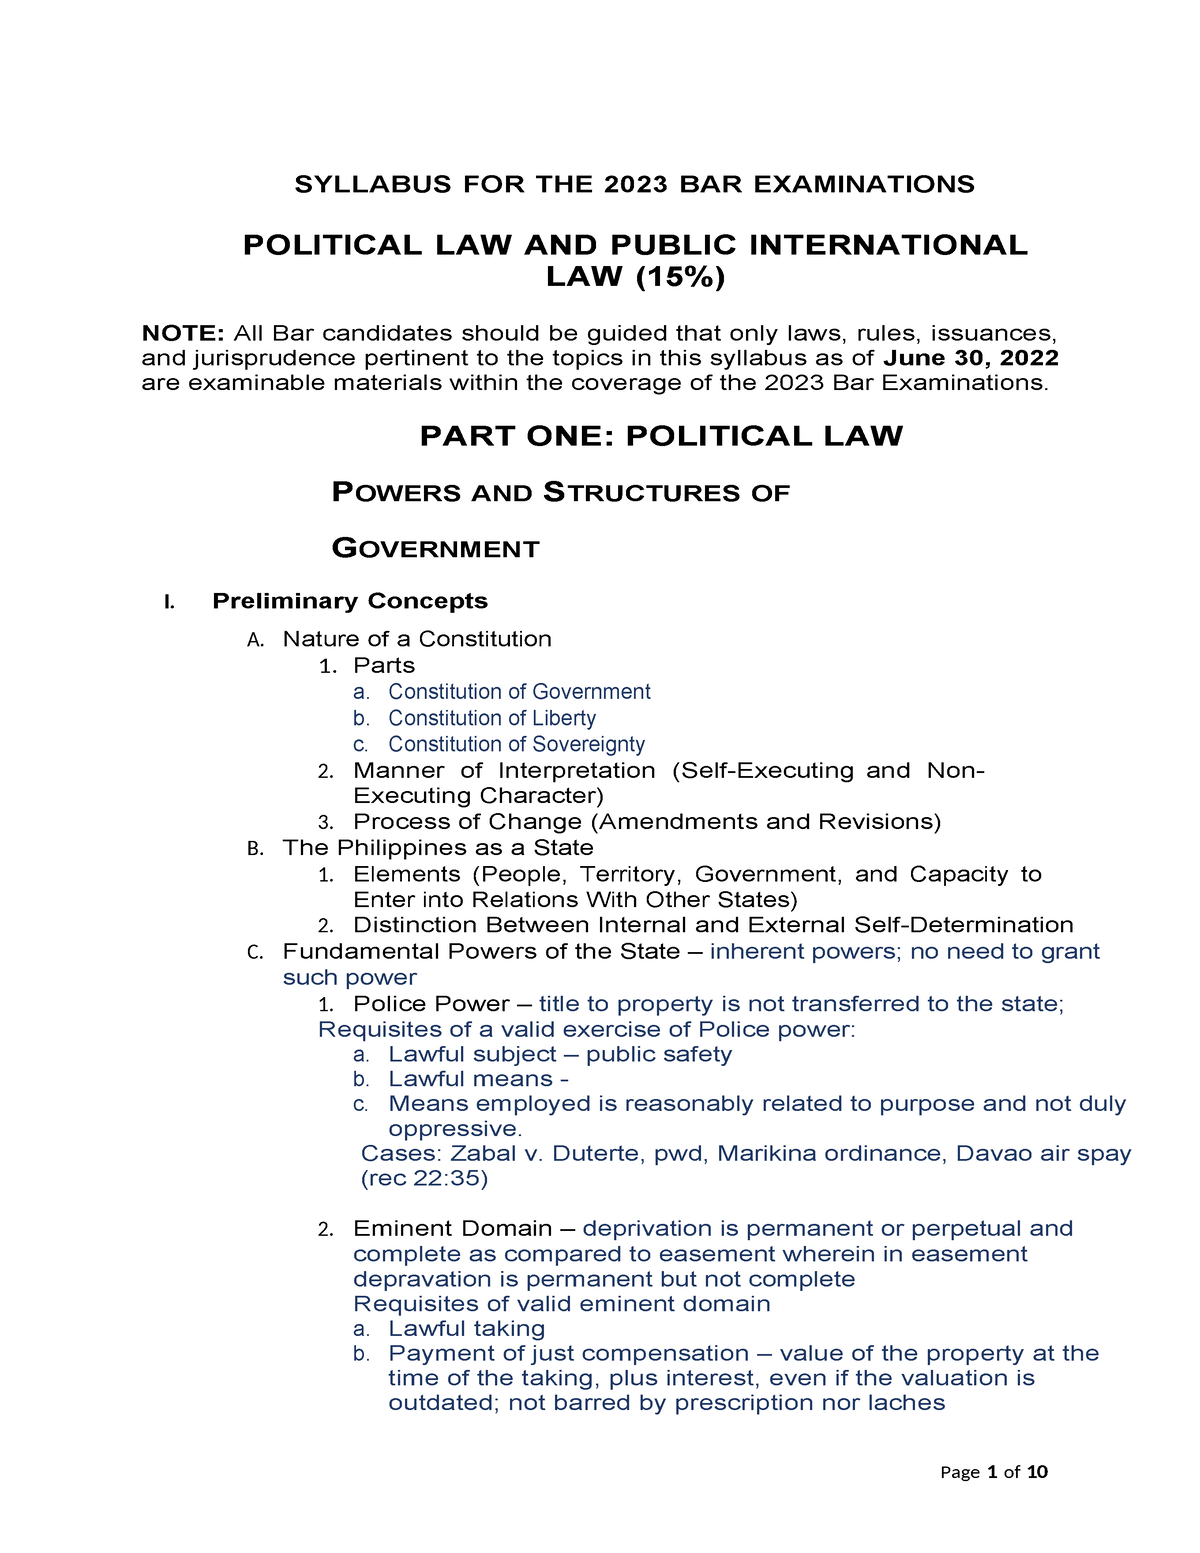 Political Law Bar Exam Syllabus 2023 SYLLABUS FOR THE 2023 BAR